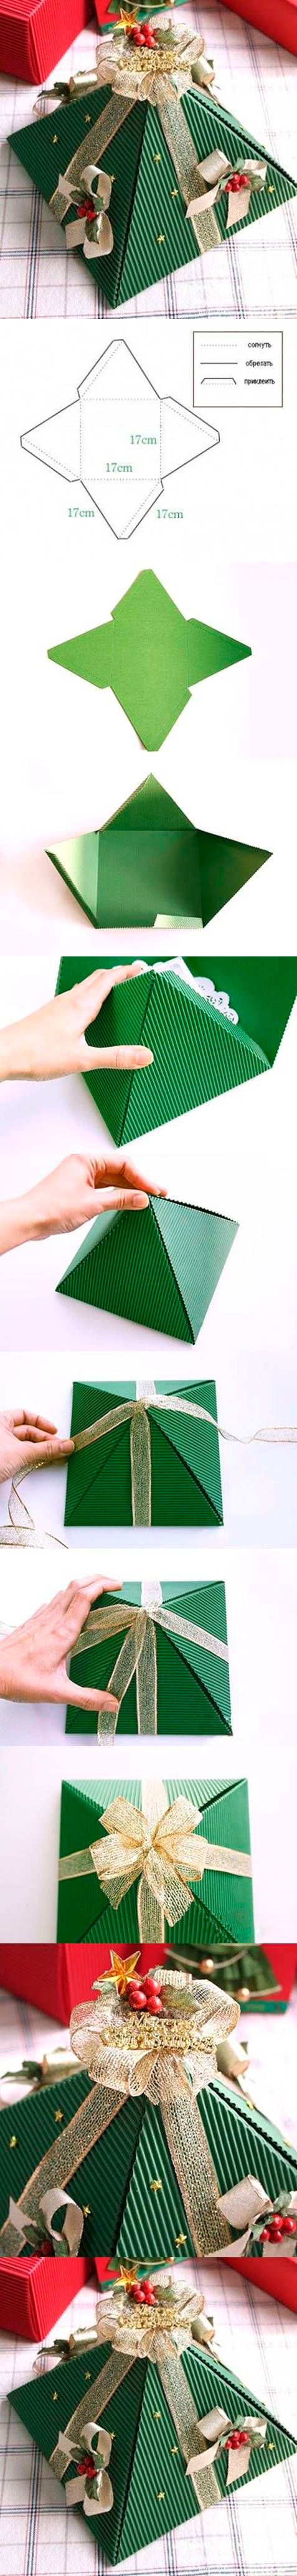 gift box with cardboard